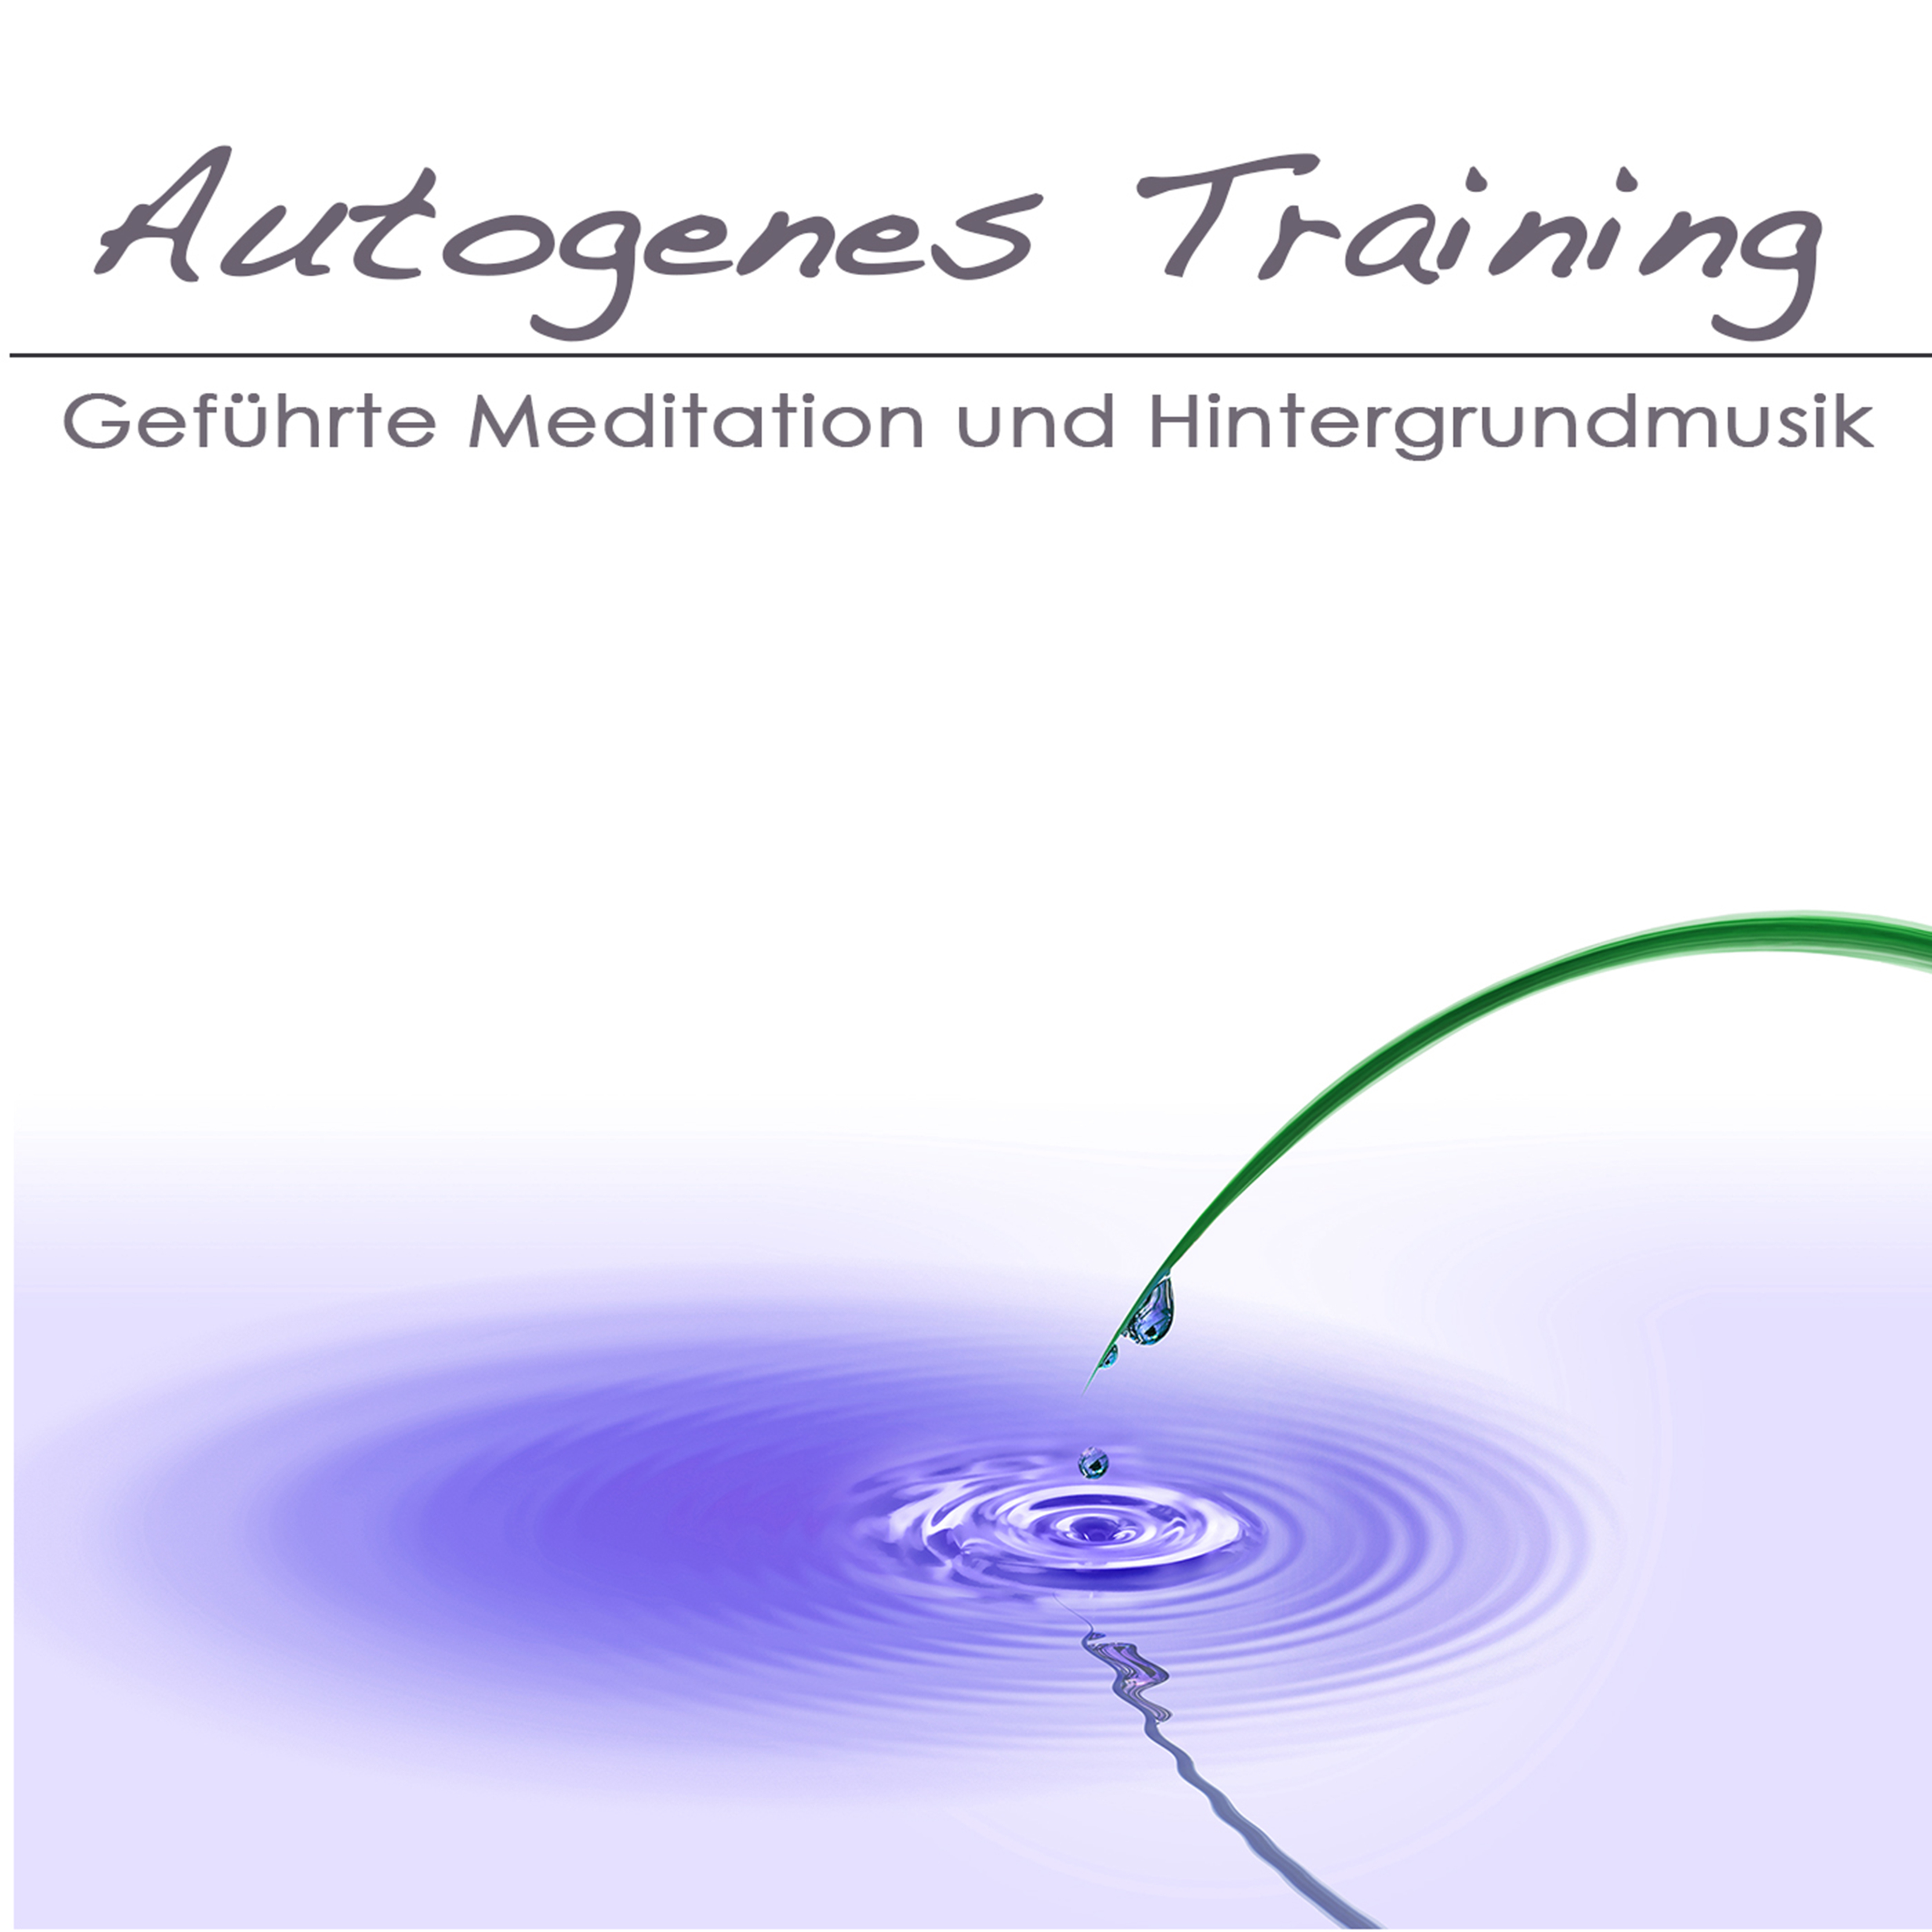 Autogenes Training - Geführte Meditation und Hintergrundmusik für Autogenic Training